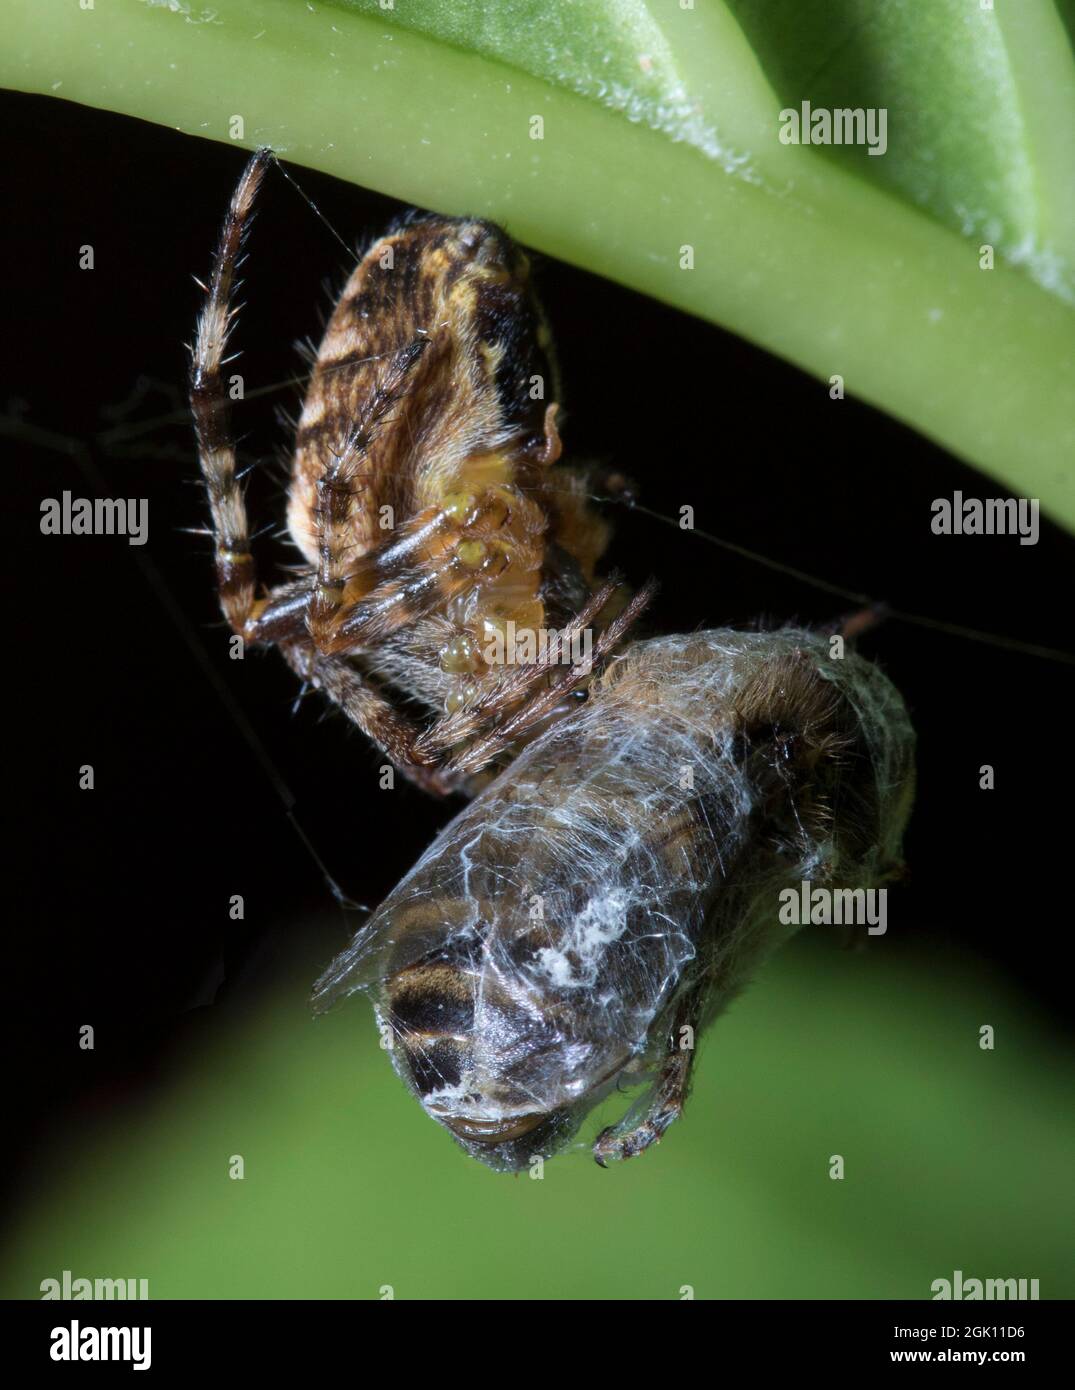 Garden Spider and Prey Stock Photo